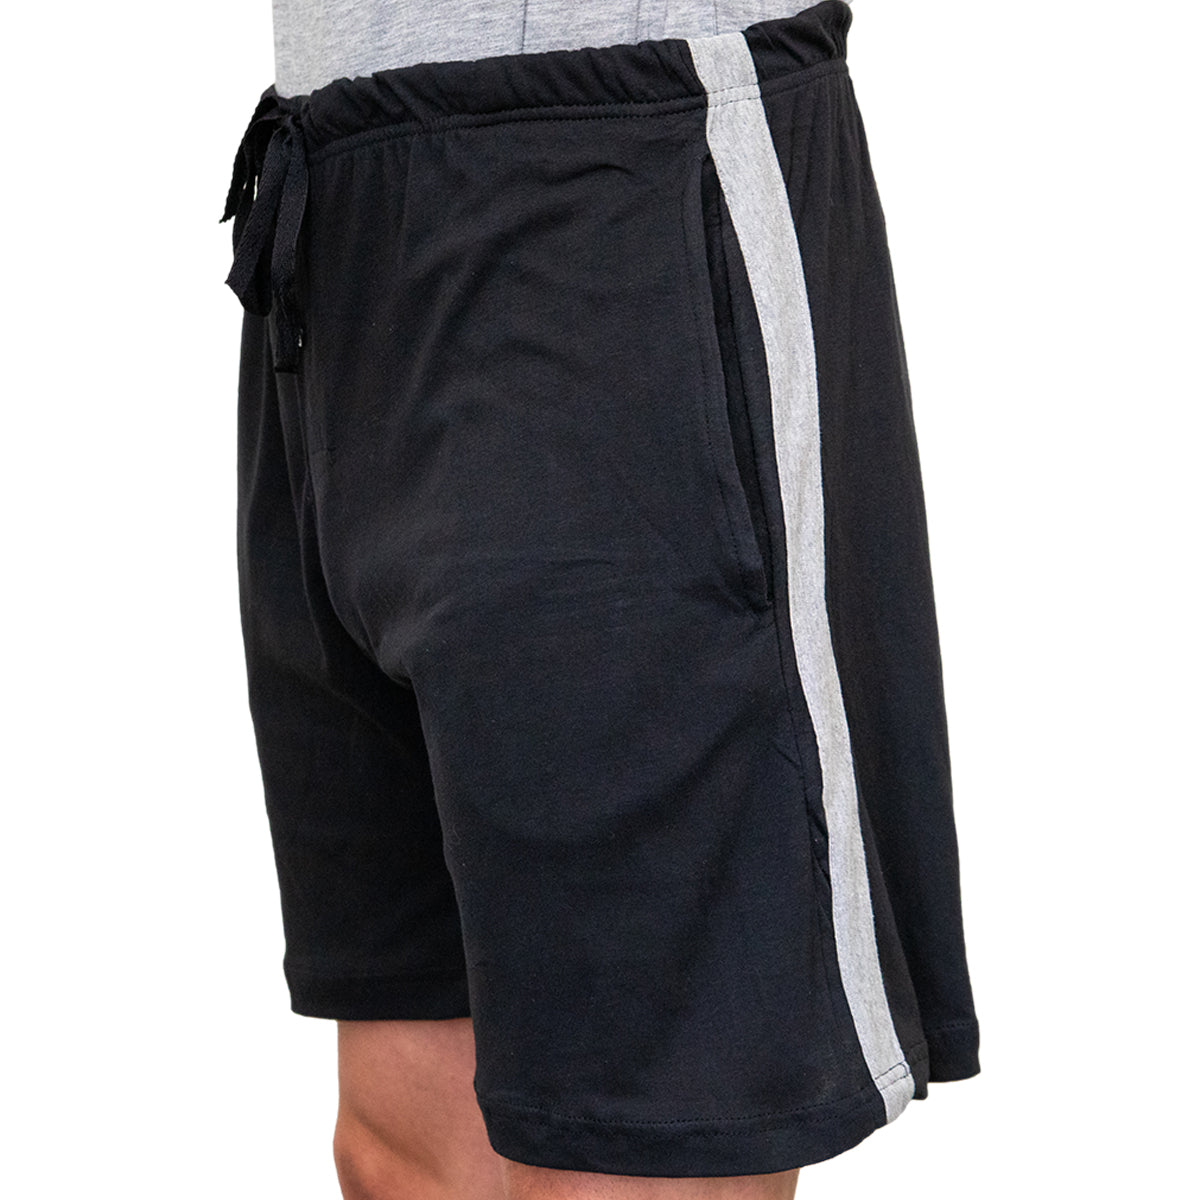 TruFit Men’s Cotton Lightweight Shorts – Pajama Lounge & Sleepwear